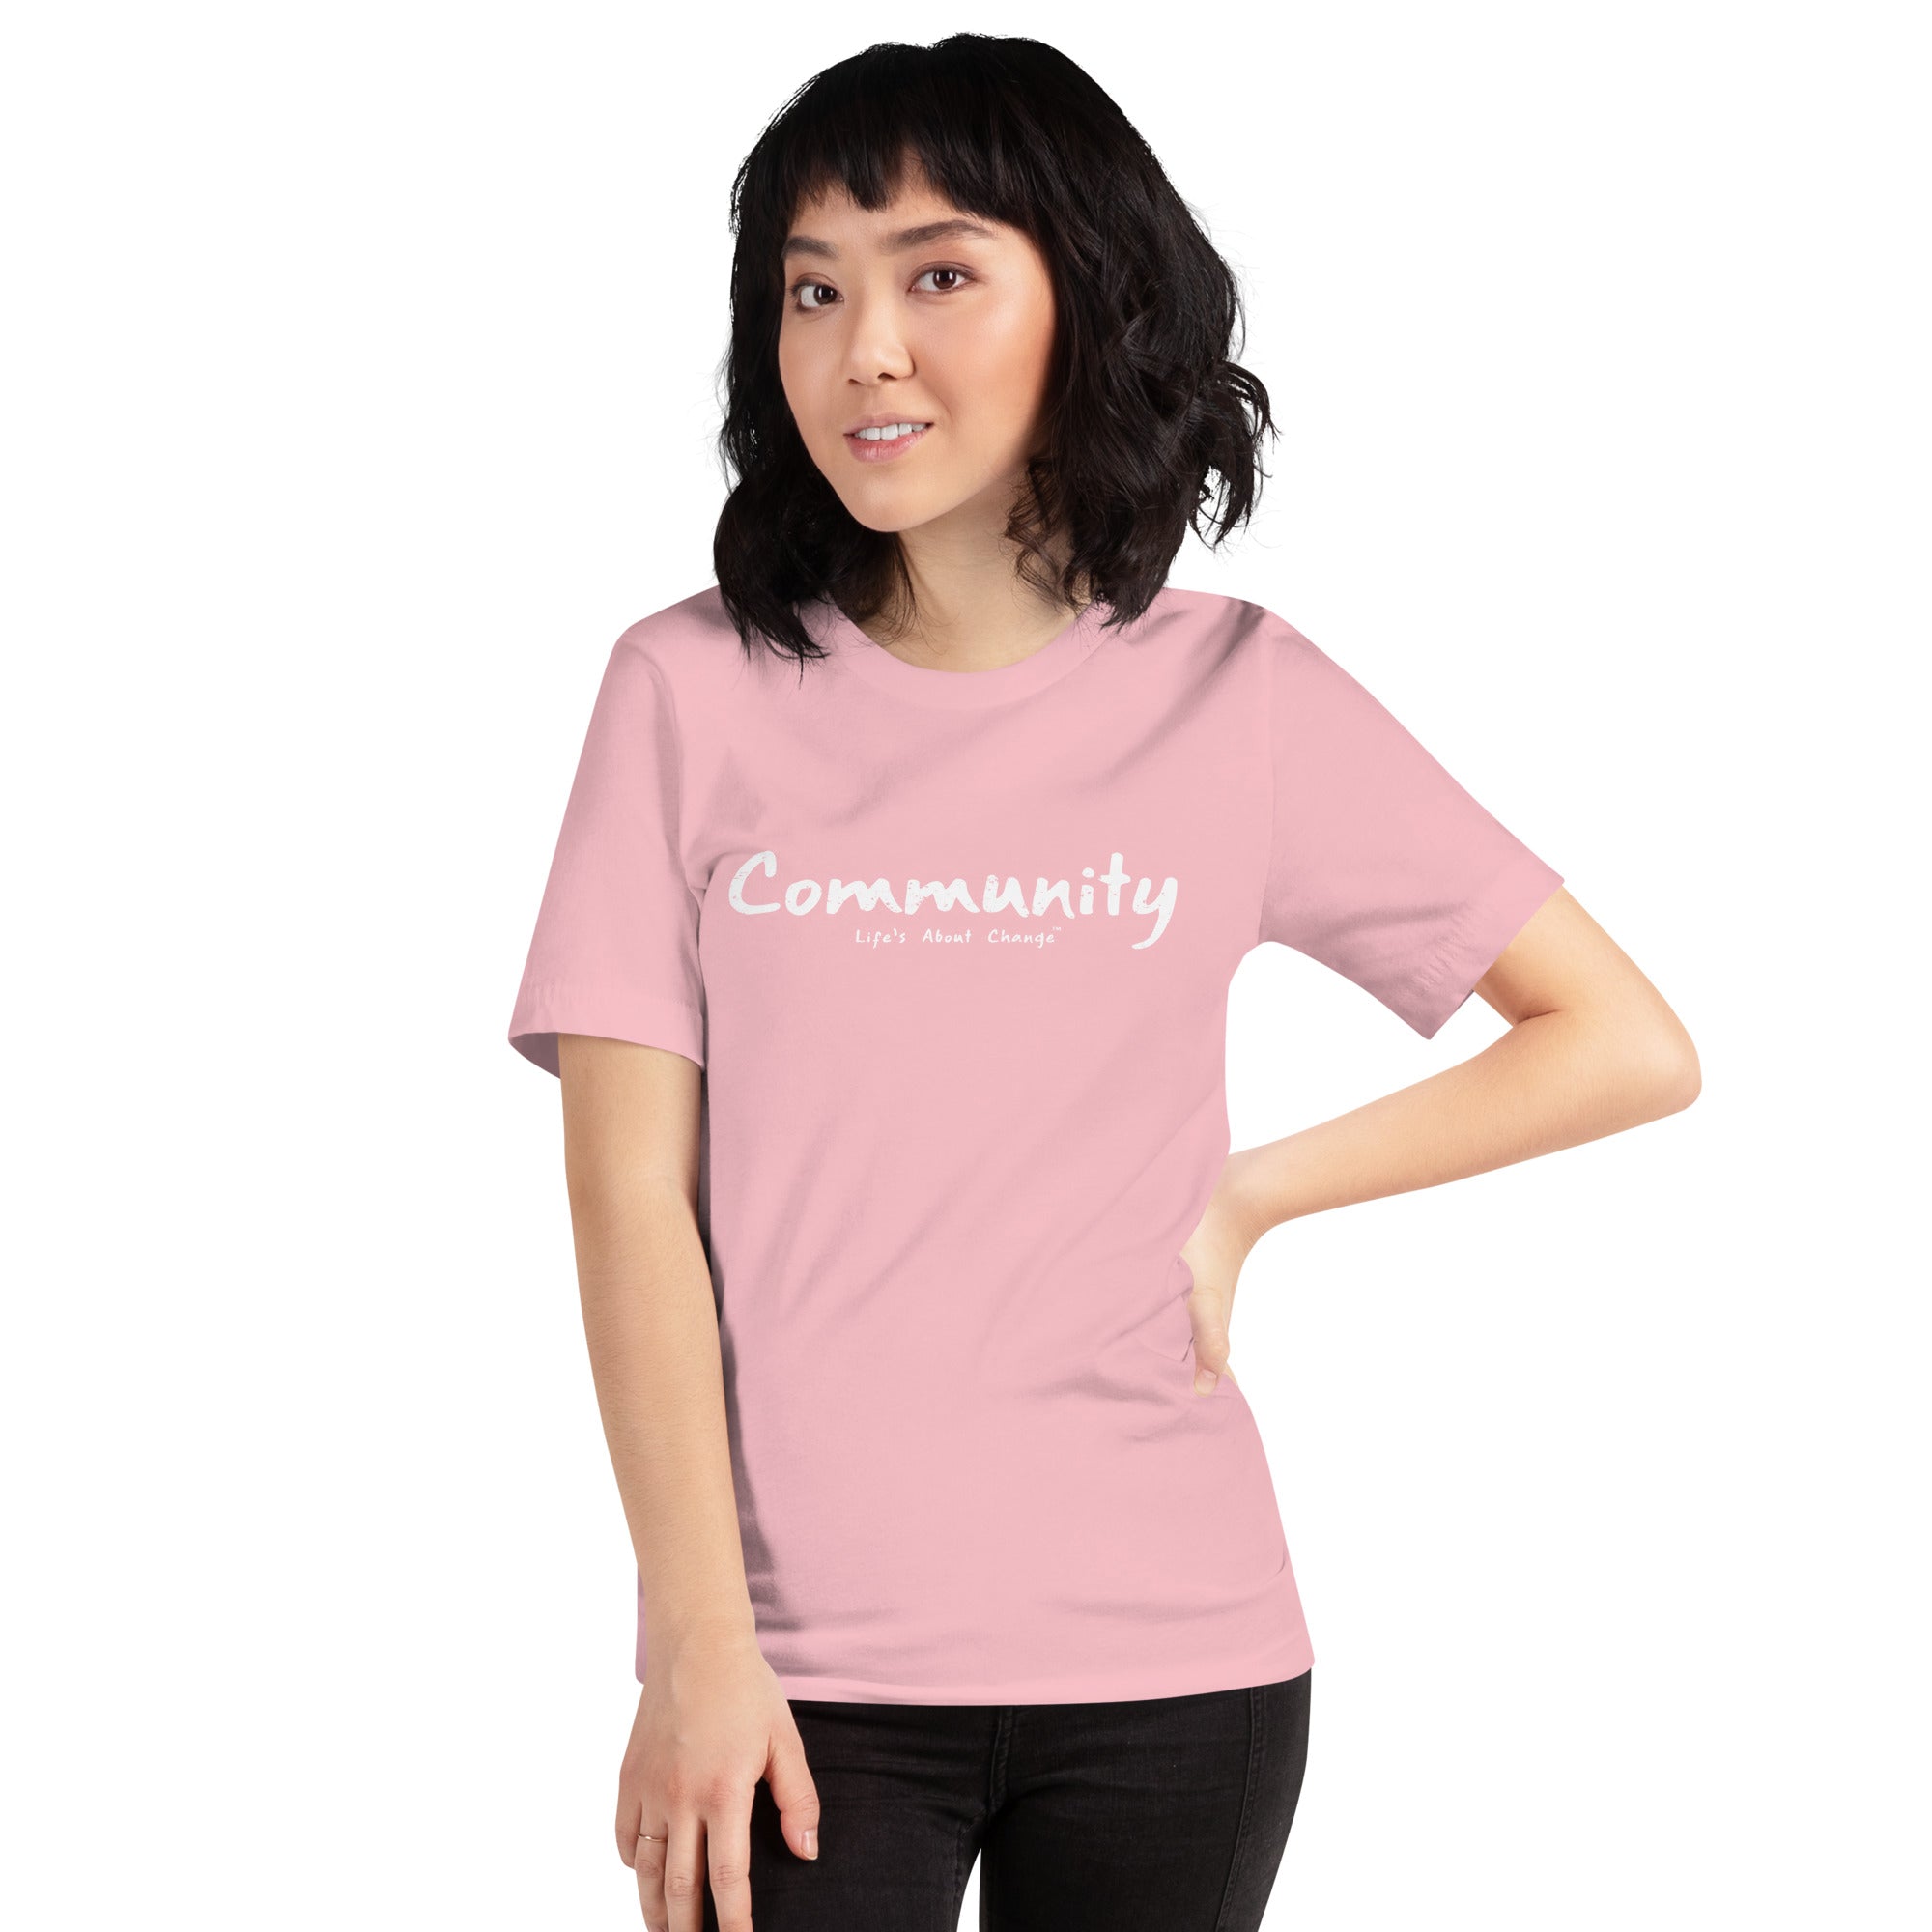 Community Unisex T-Shirt